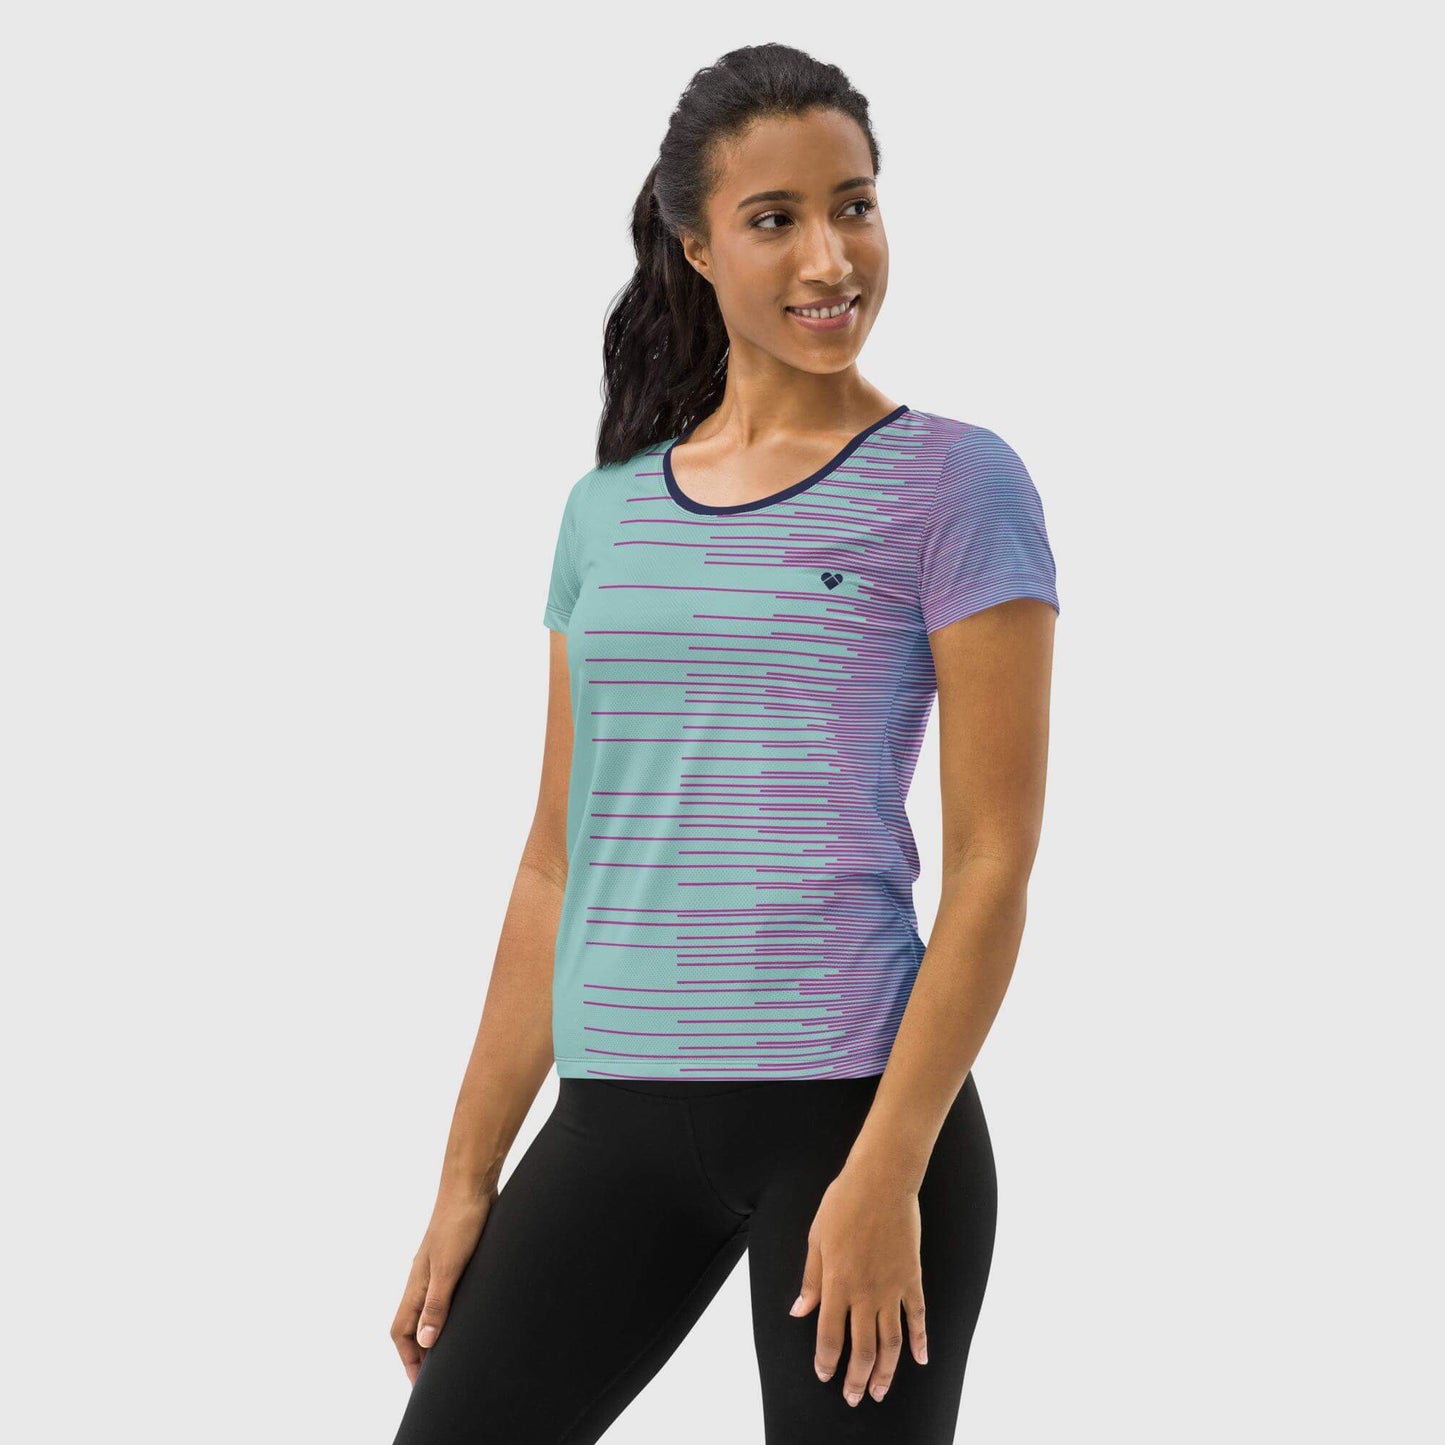 Mint Stripes Dual Sport Shirt on a Model | CRiZ AMOR Women's Fashion